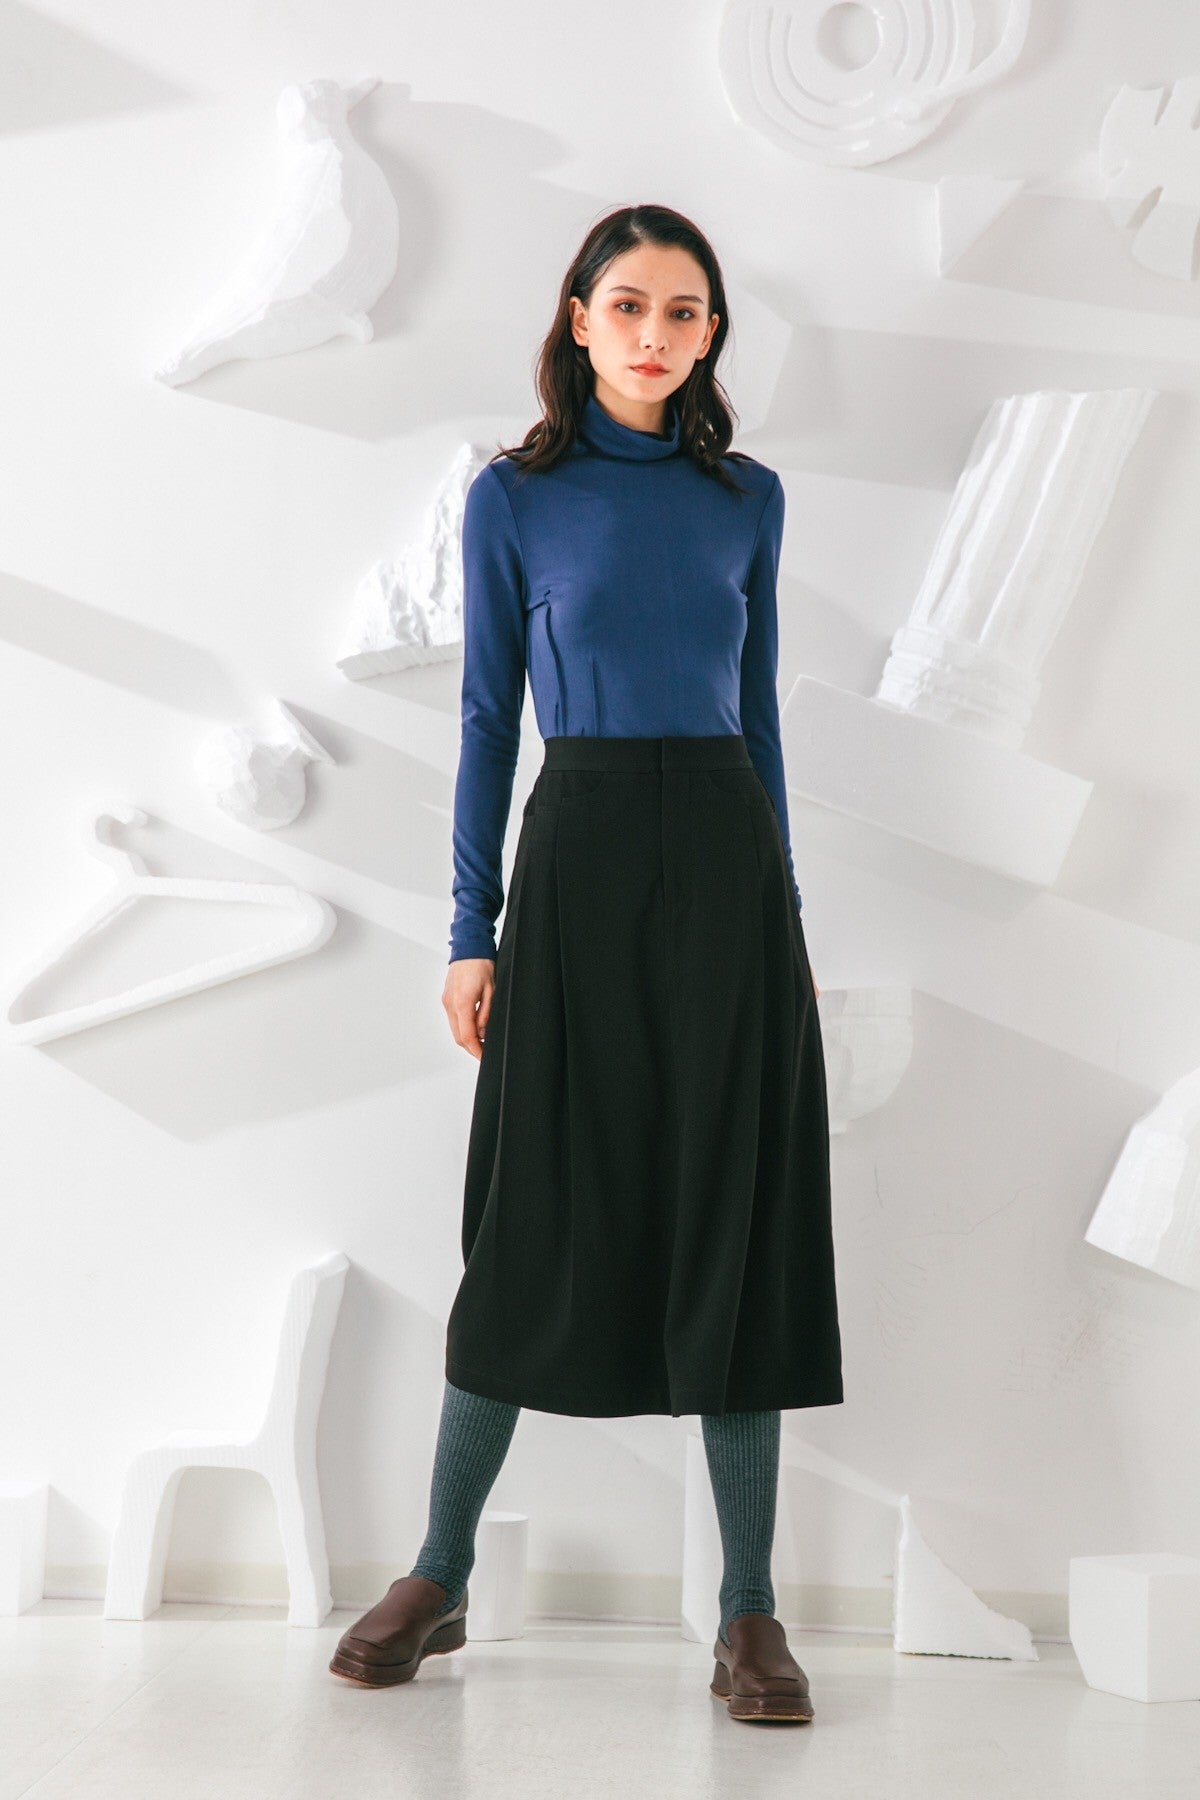 SKYE San Francisco SF shop ethical sustainable modern minimalist elegant quality women clothing fashion brand Aurelie Midi Skirt Black 6